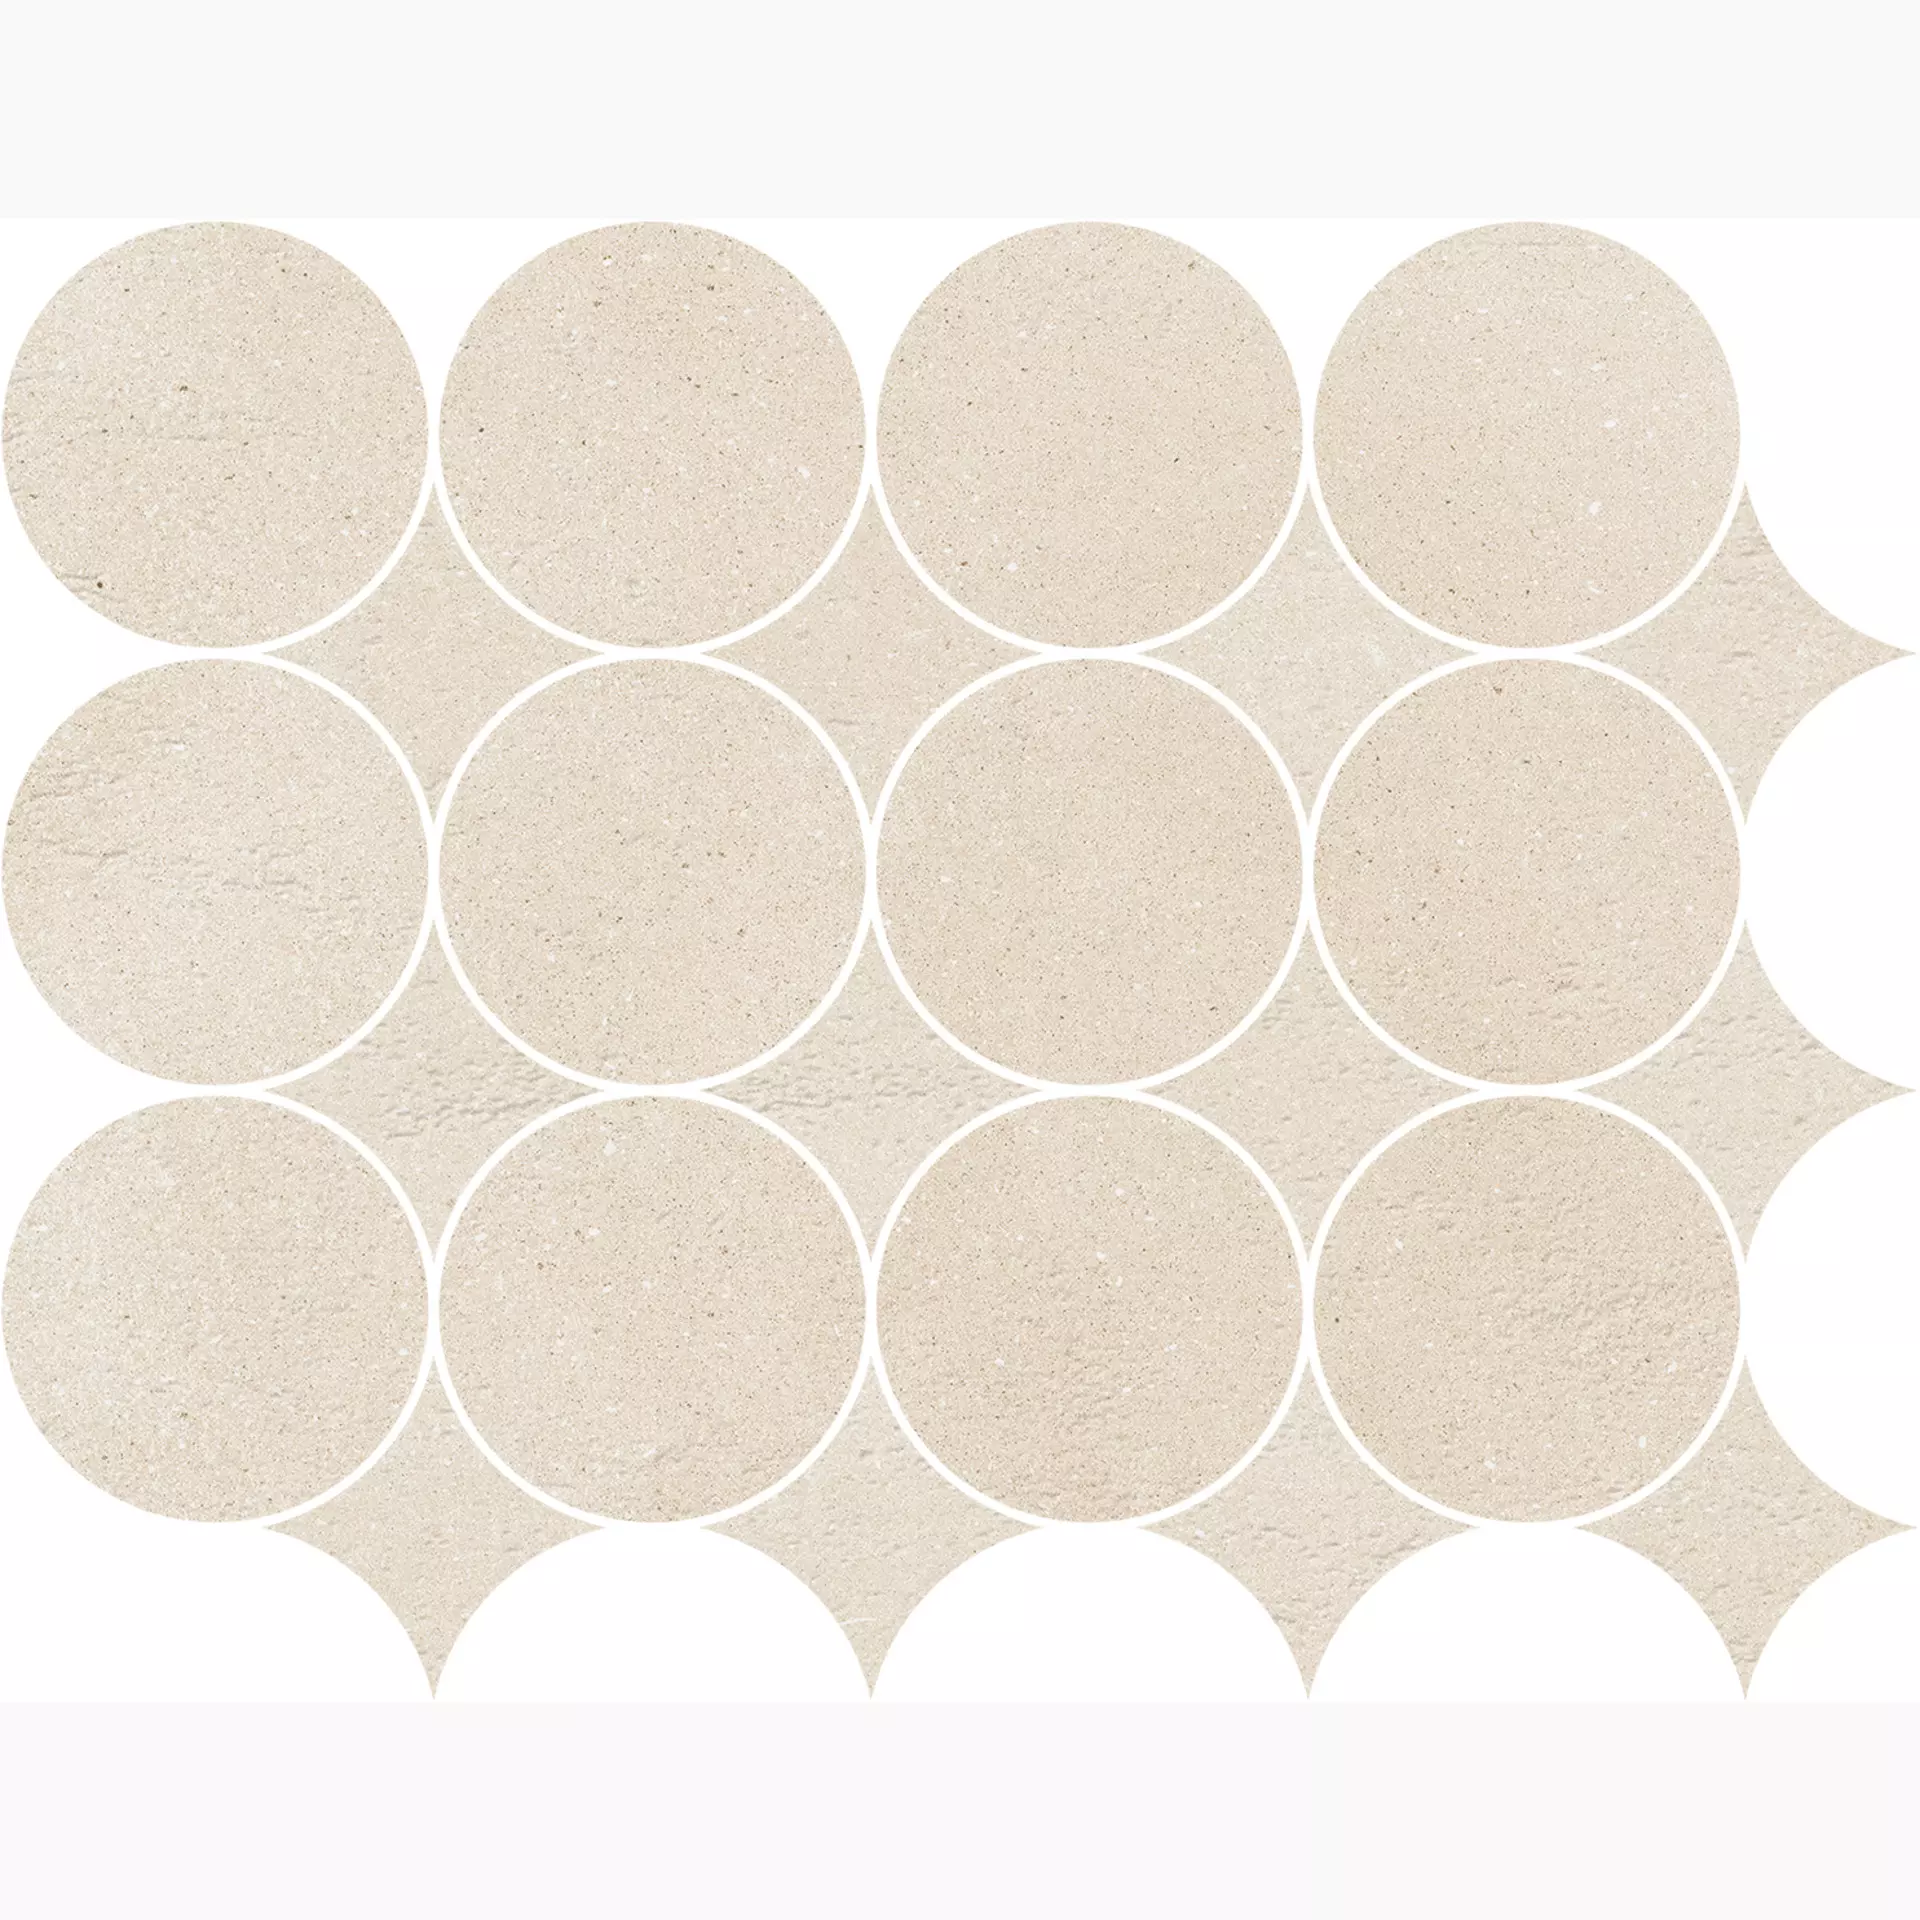 Marazzi Slow Pomice Naturale – Matt Pomice MP2T matt natur 32,1x41,6cm Mosaik Circolare rektifiziert 9mm